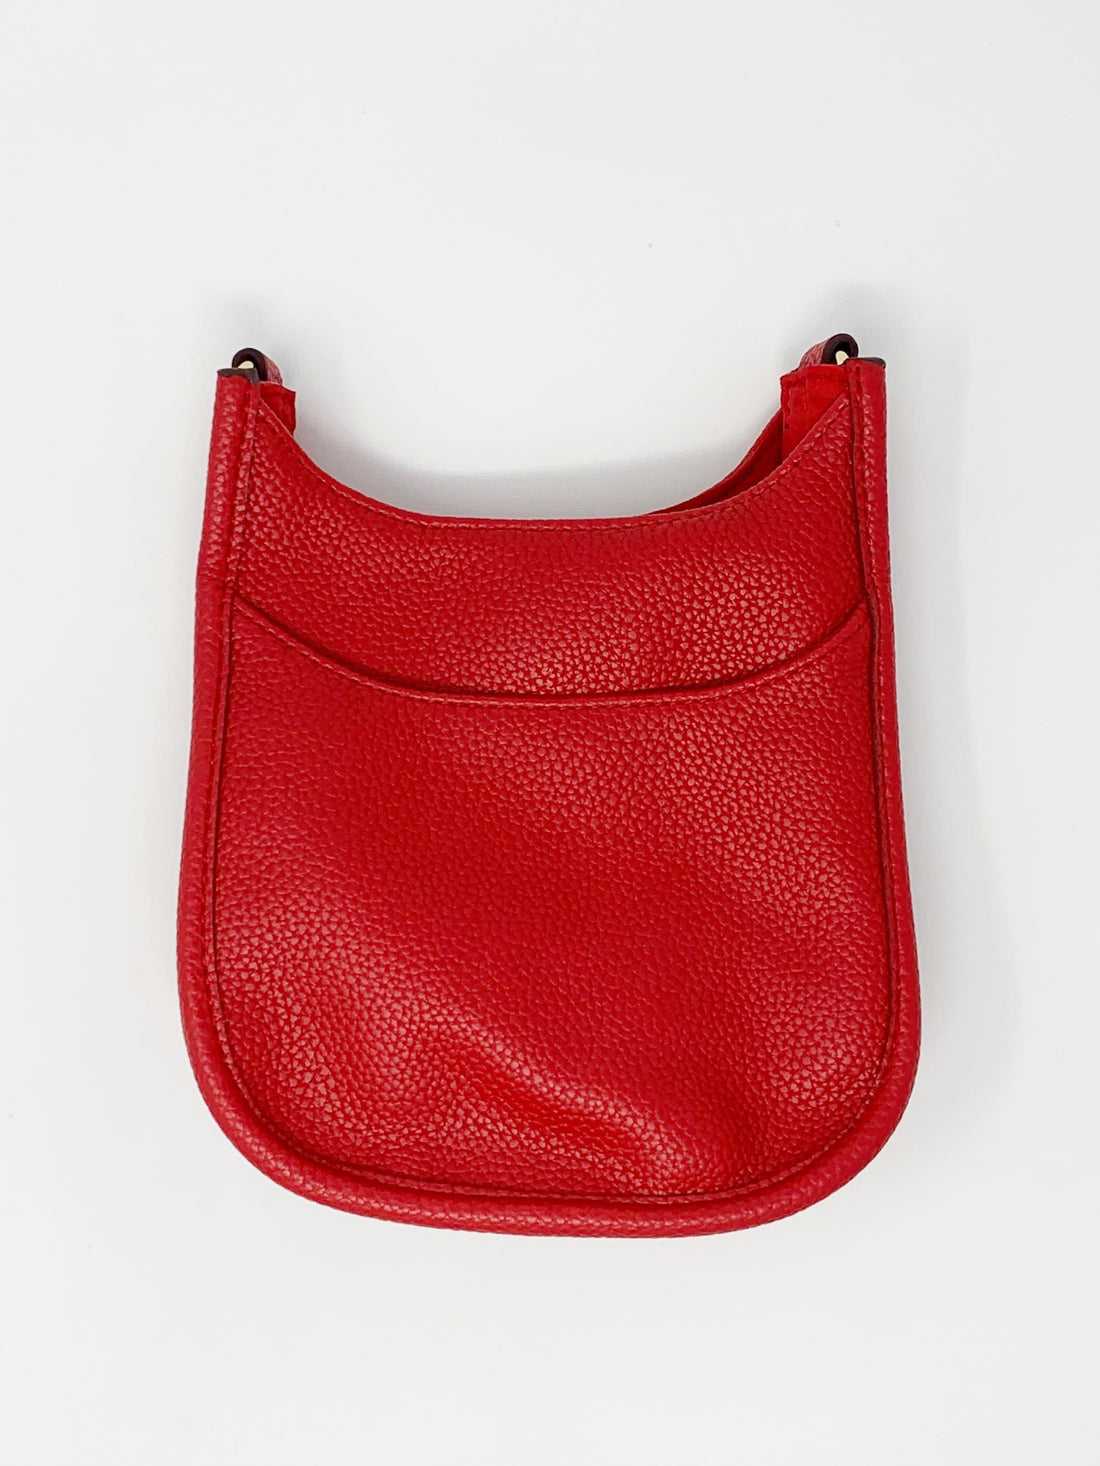 Mini Saddle Bag in Vegan Leather in Bright Red